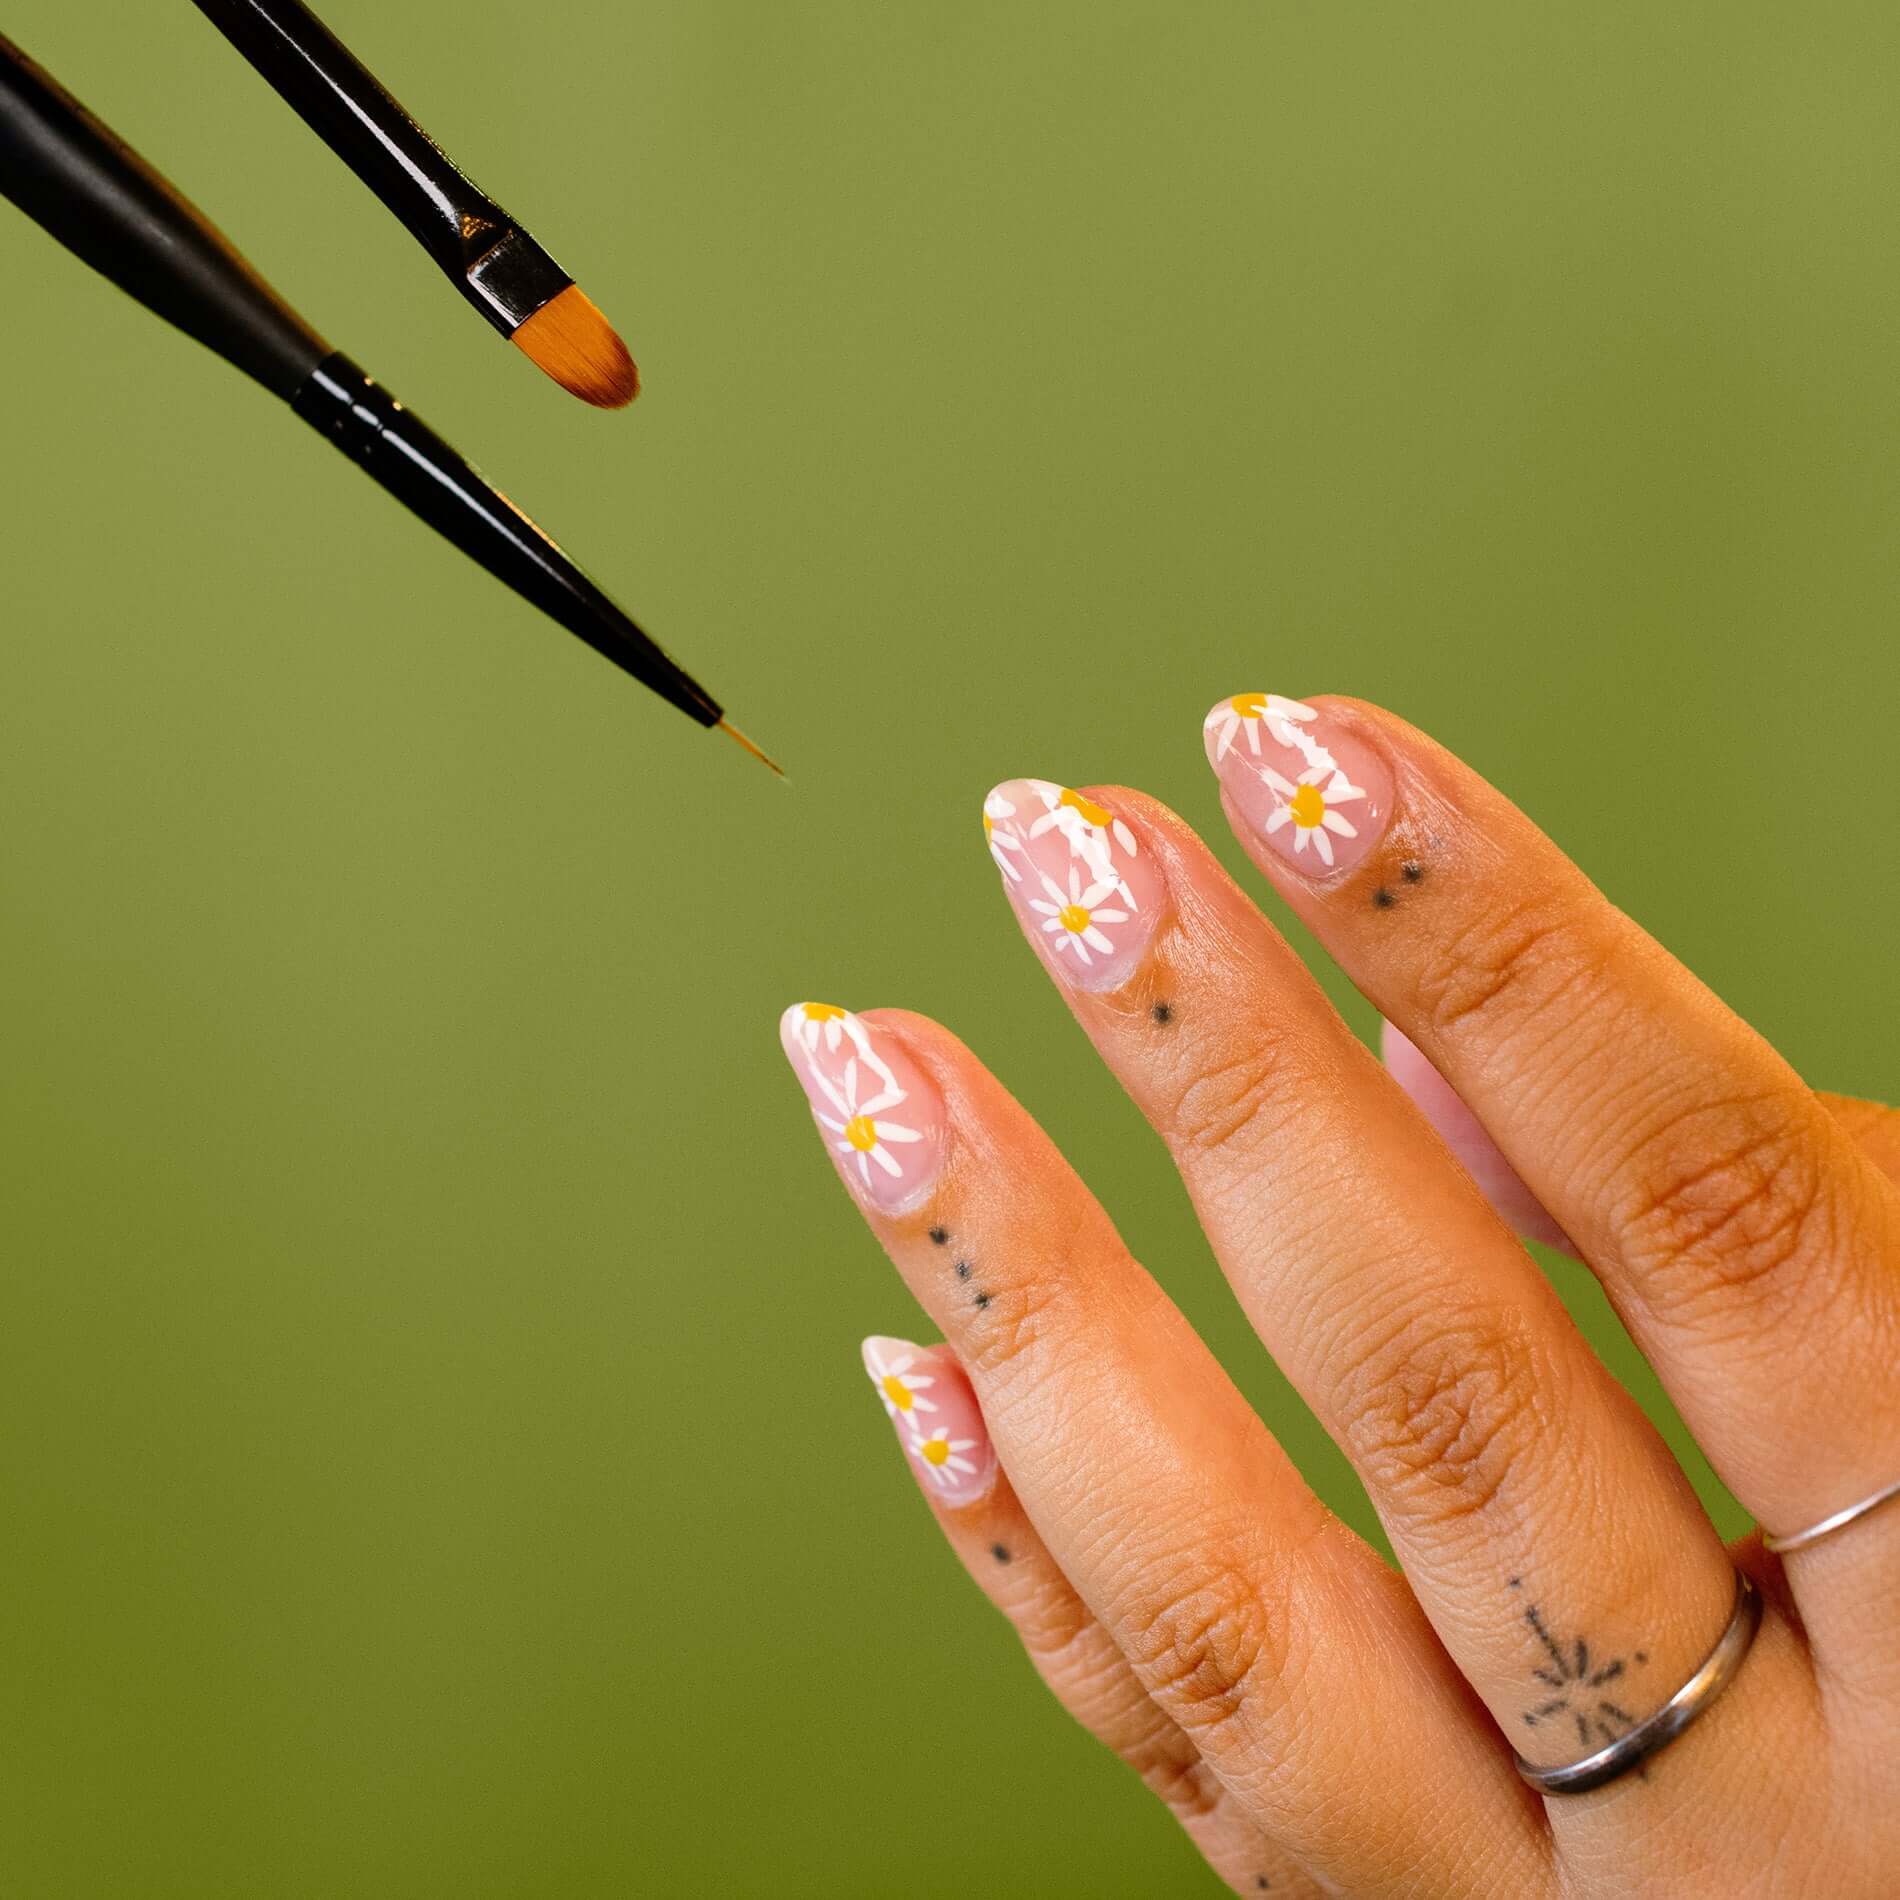 Toenail Tips Starter Kit nail art tools all in one set pedicure tools –  Vettsy